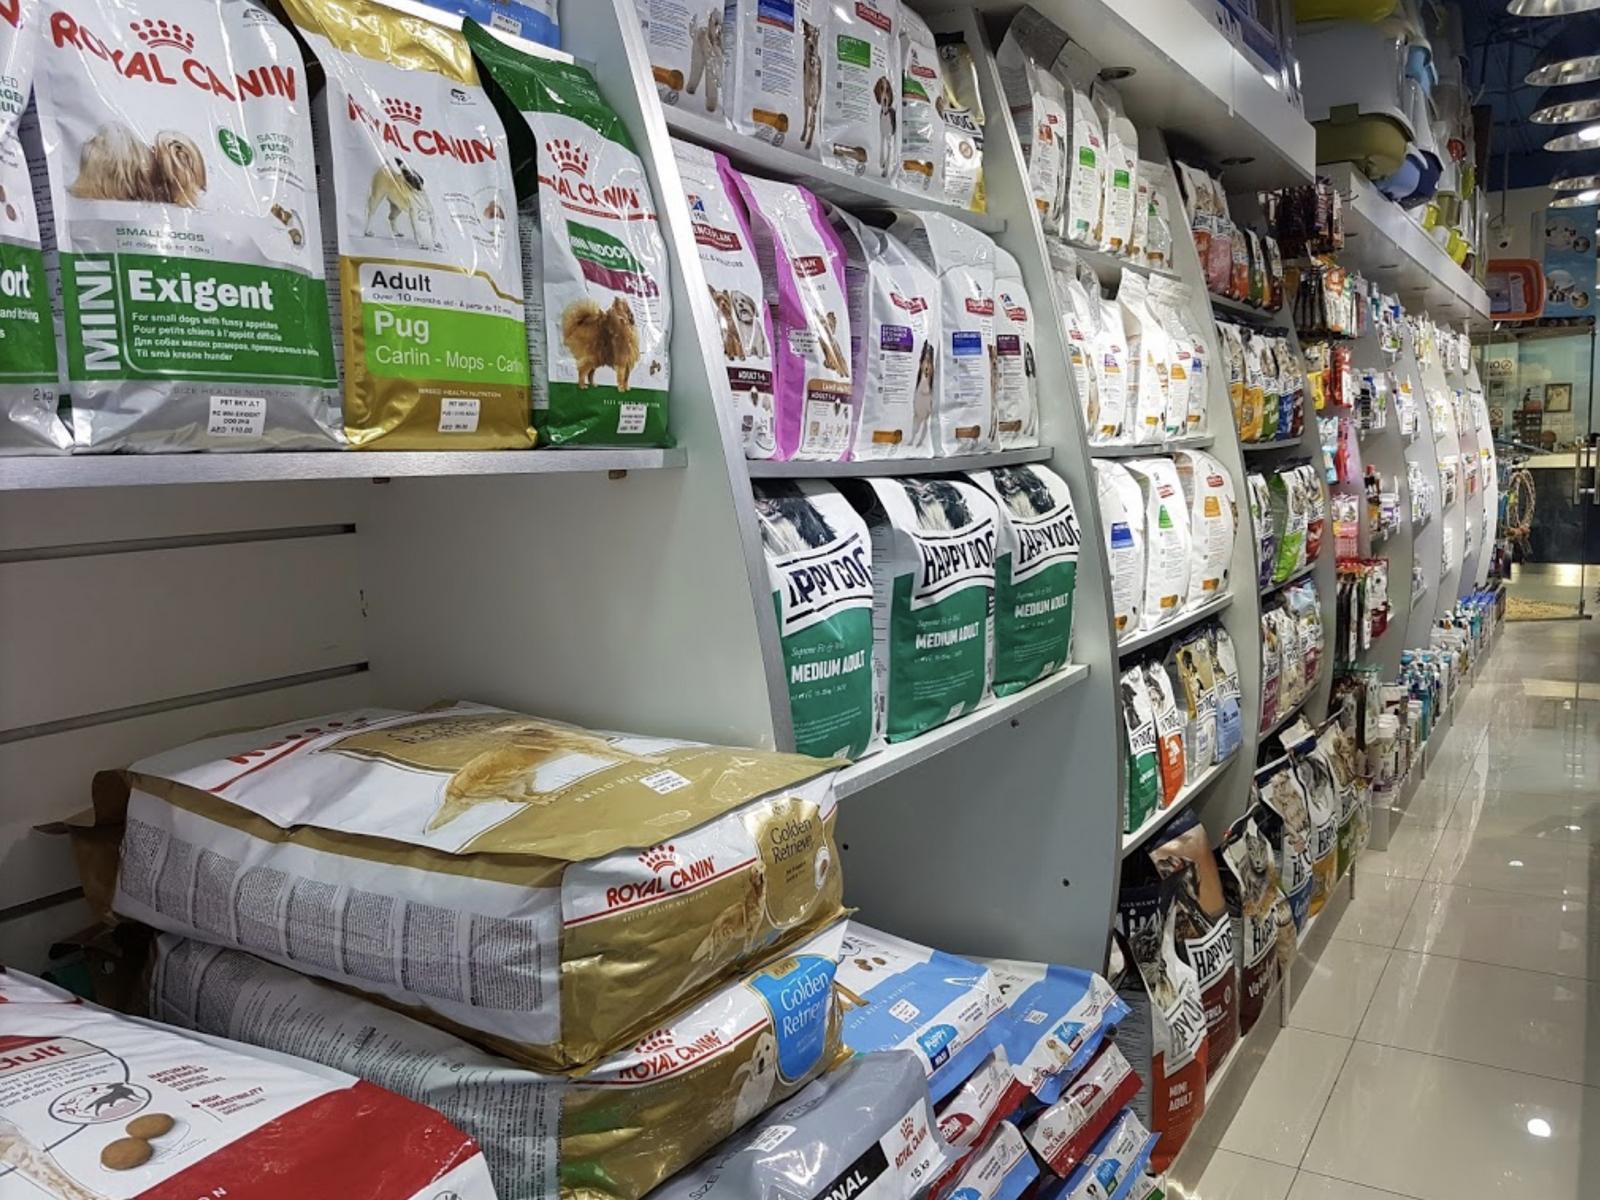 The Biggest Pet Shop In Dubai Buy Pet Supplies In Dubai Abu Dhabi Uae Dog Food Cat Food And More Best Prices Guaranteed Pet Sky